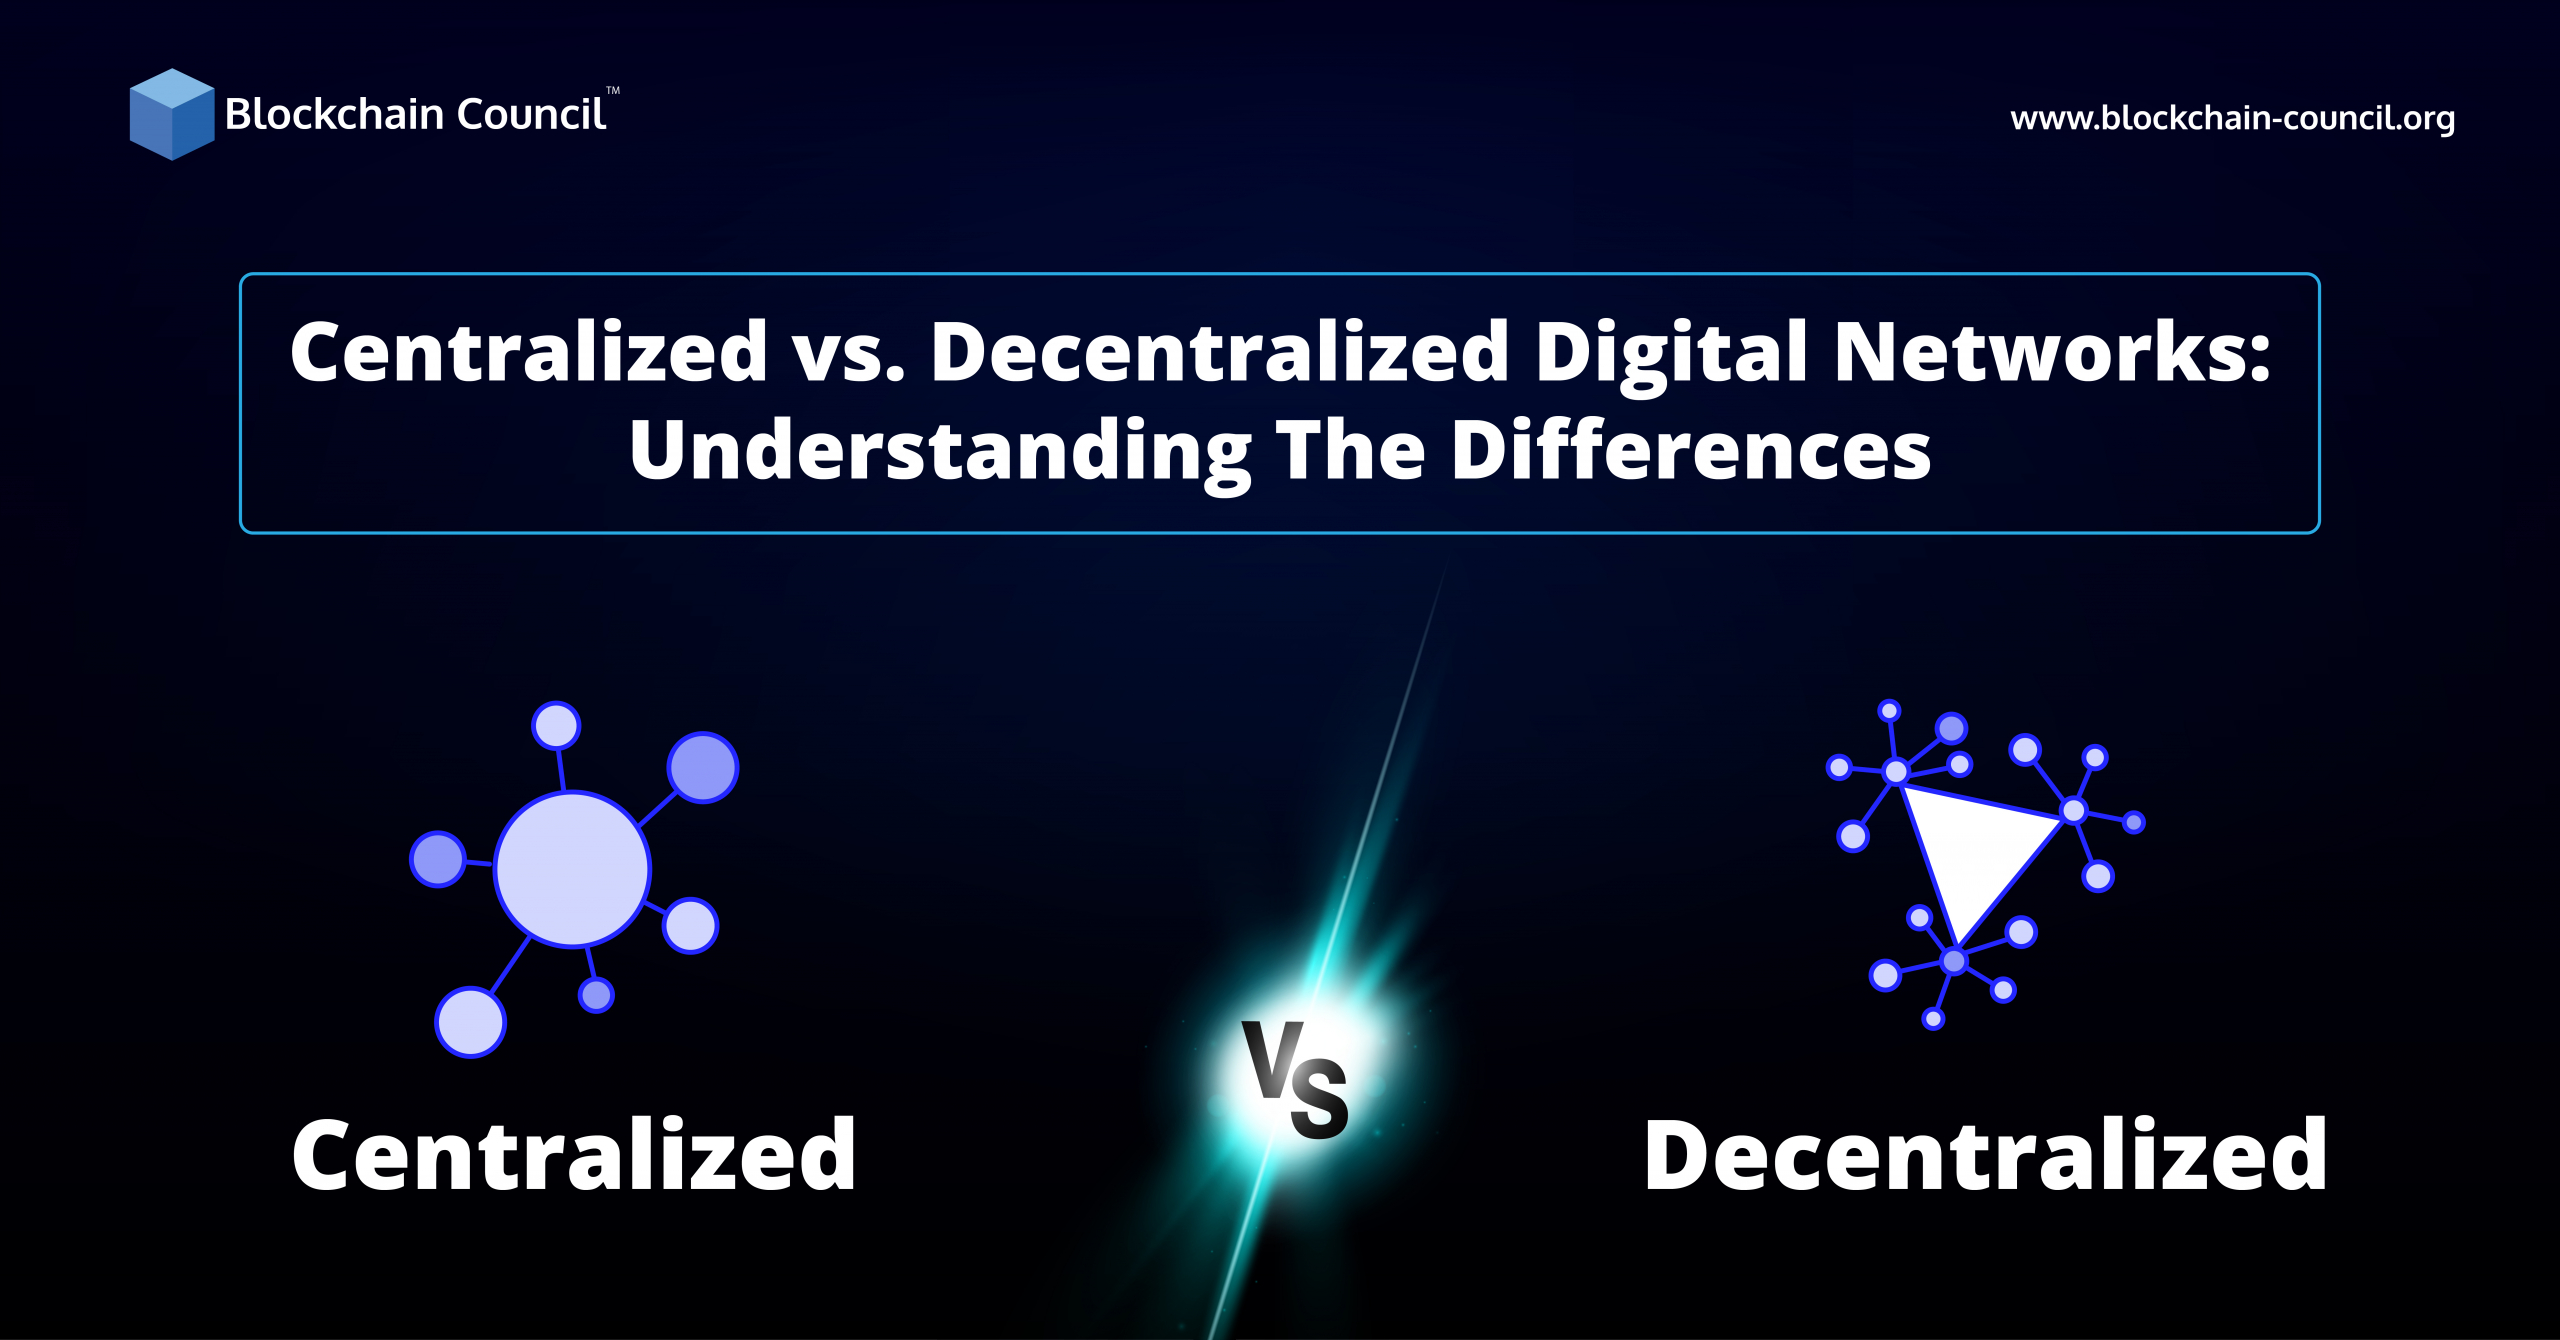 Centralized vs. Decentralized Digital Networks [UPDATED]